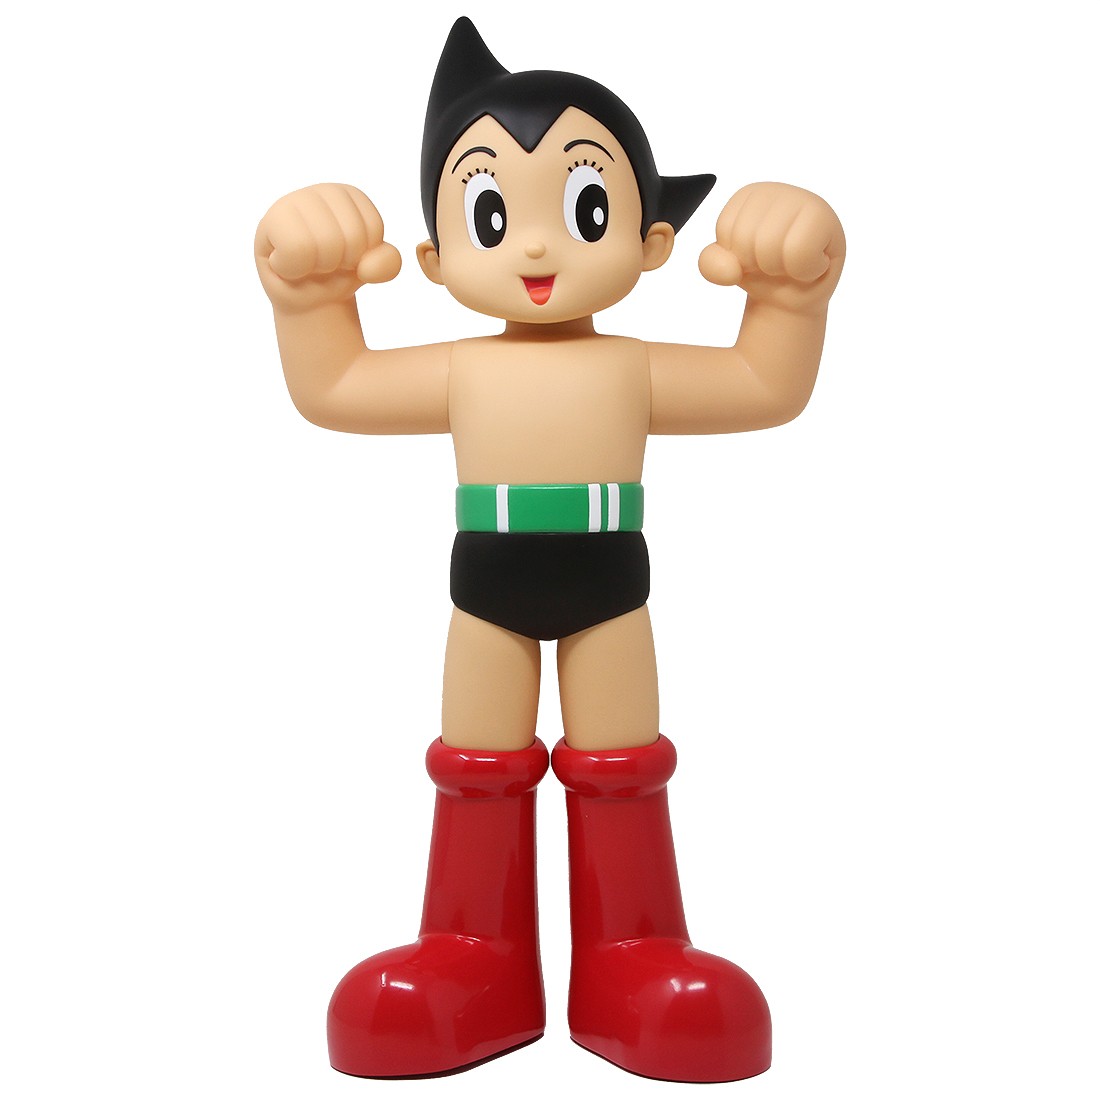 Bait Astro Boy Figure Outlet, 55% OFF | espirituviajero.com